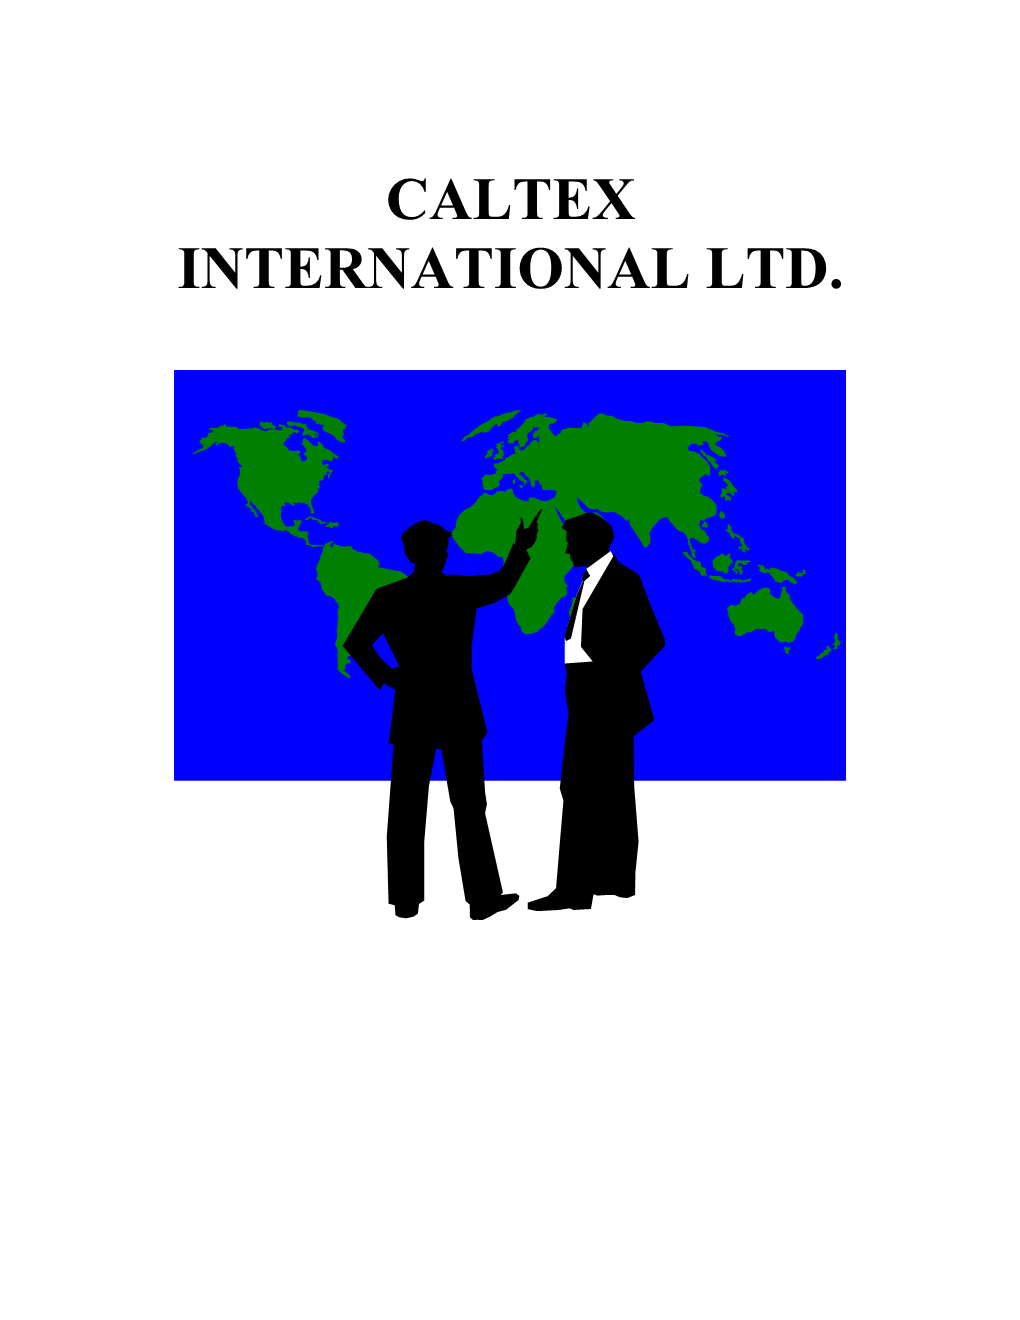 Caltex International Ltd